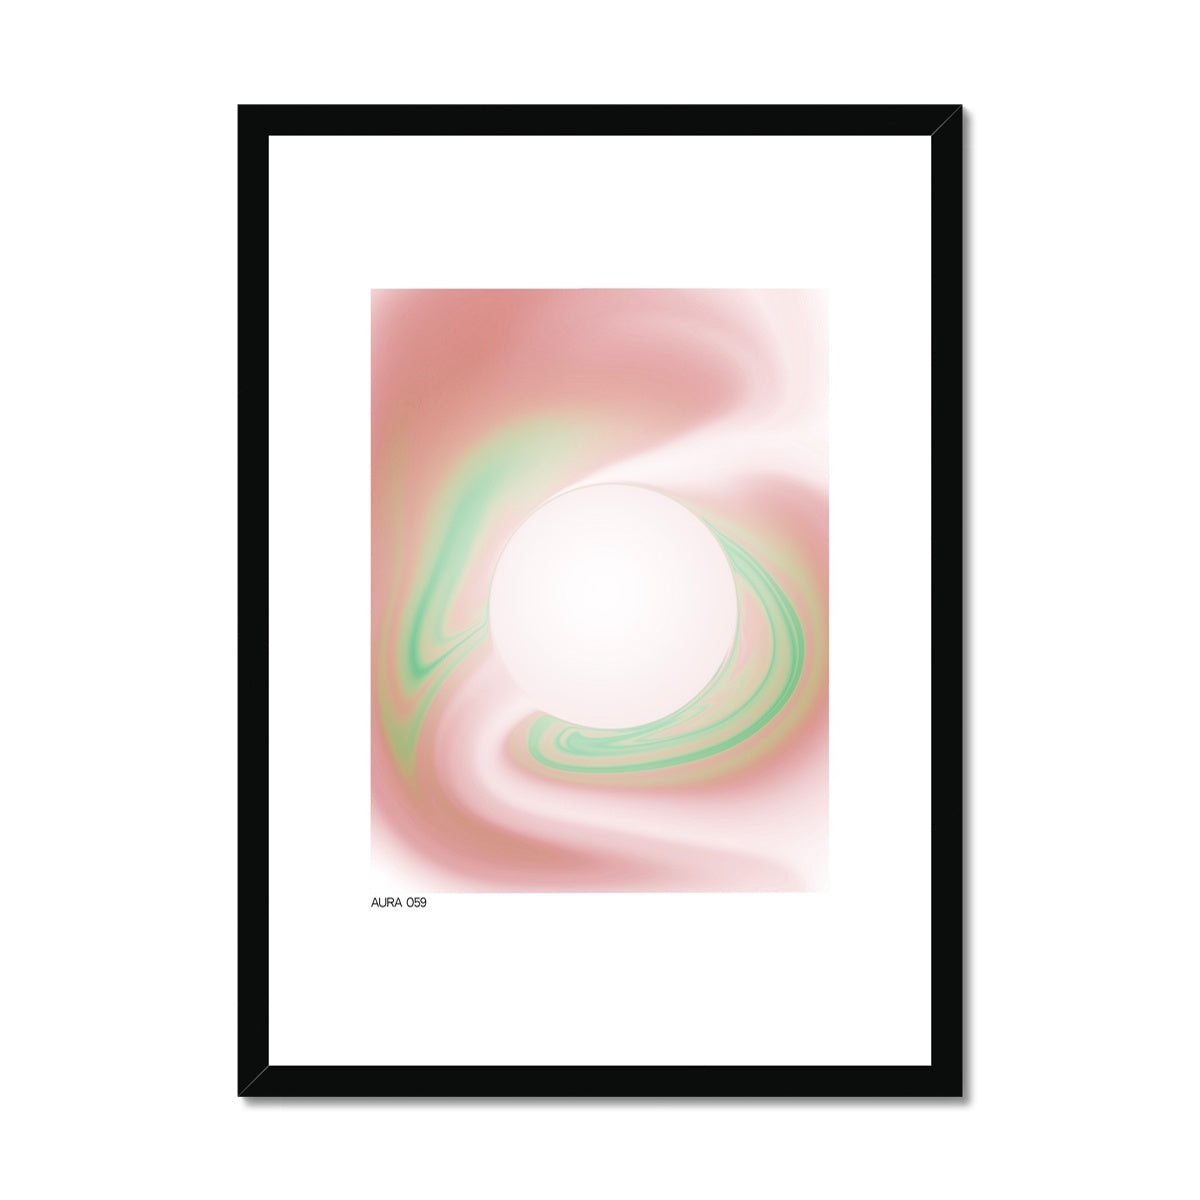 aura 059 Framed & Mounted Print